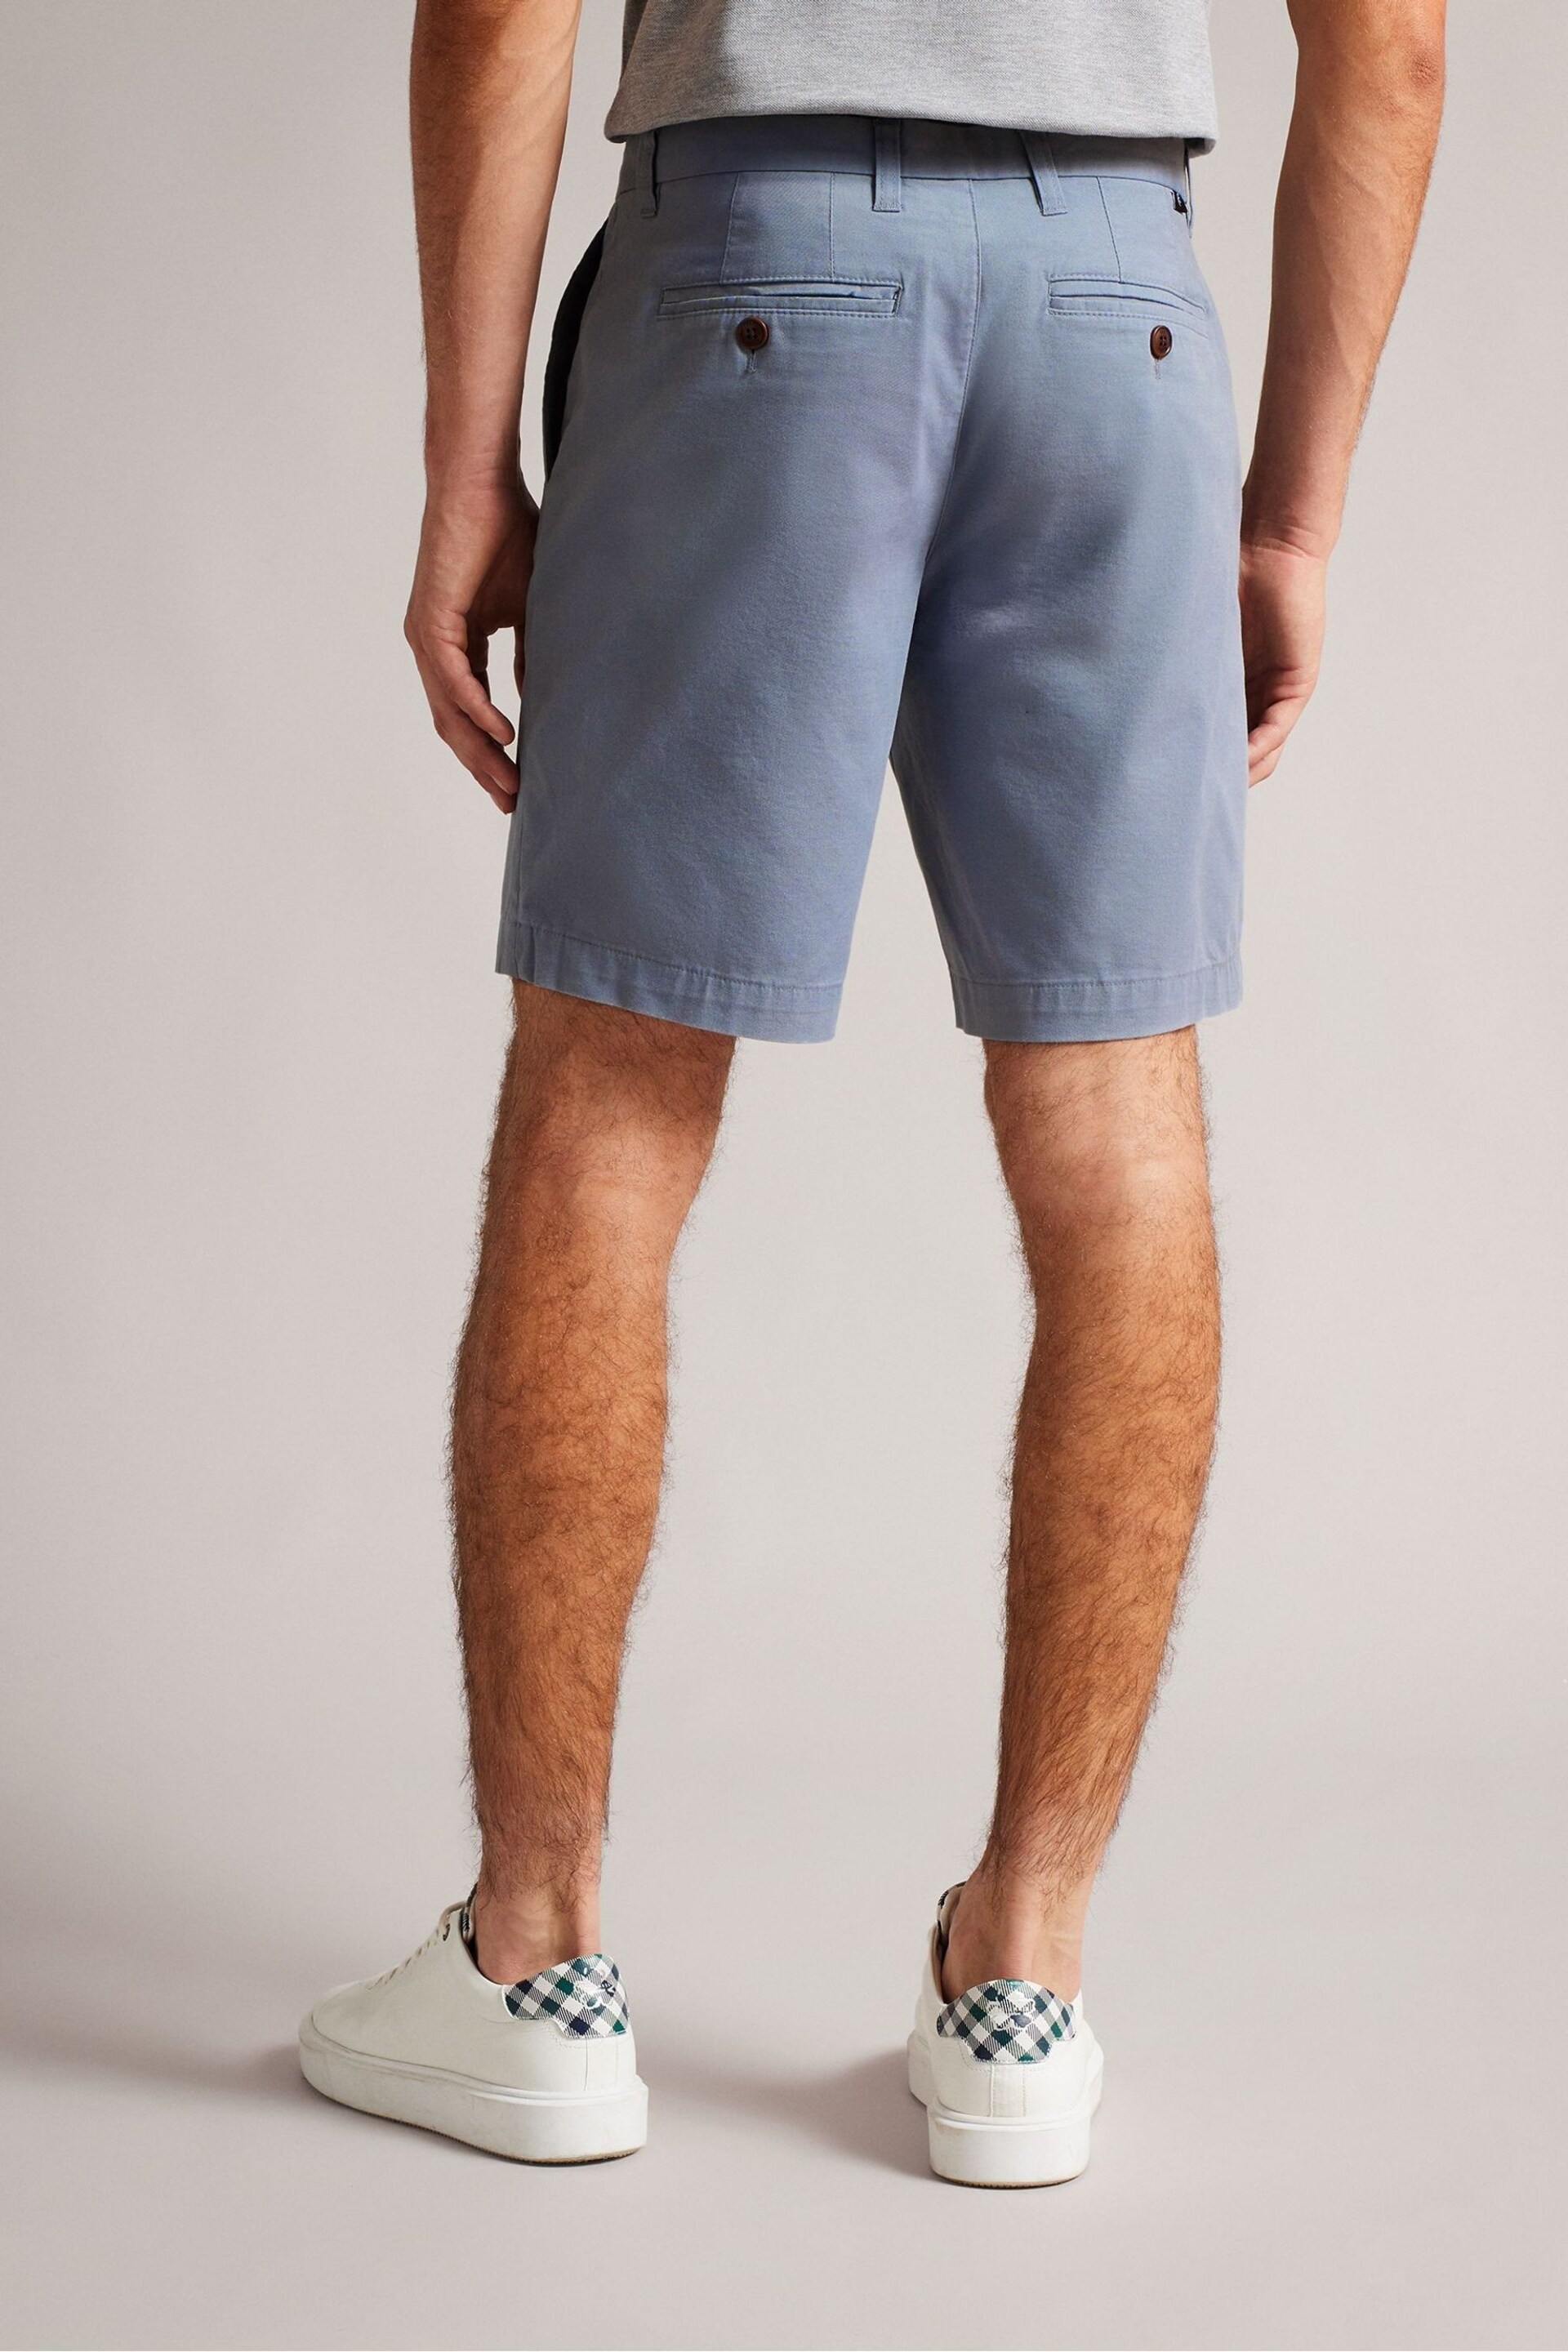 Ted Baker Mid Blue Ashfrd Chino Shorts - Image 2 of 4